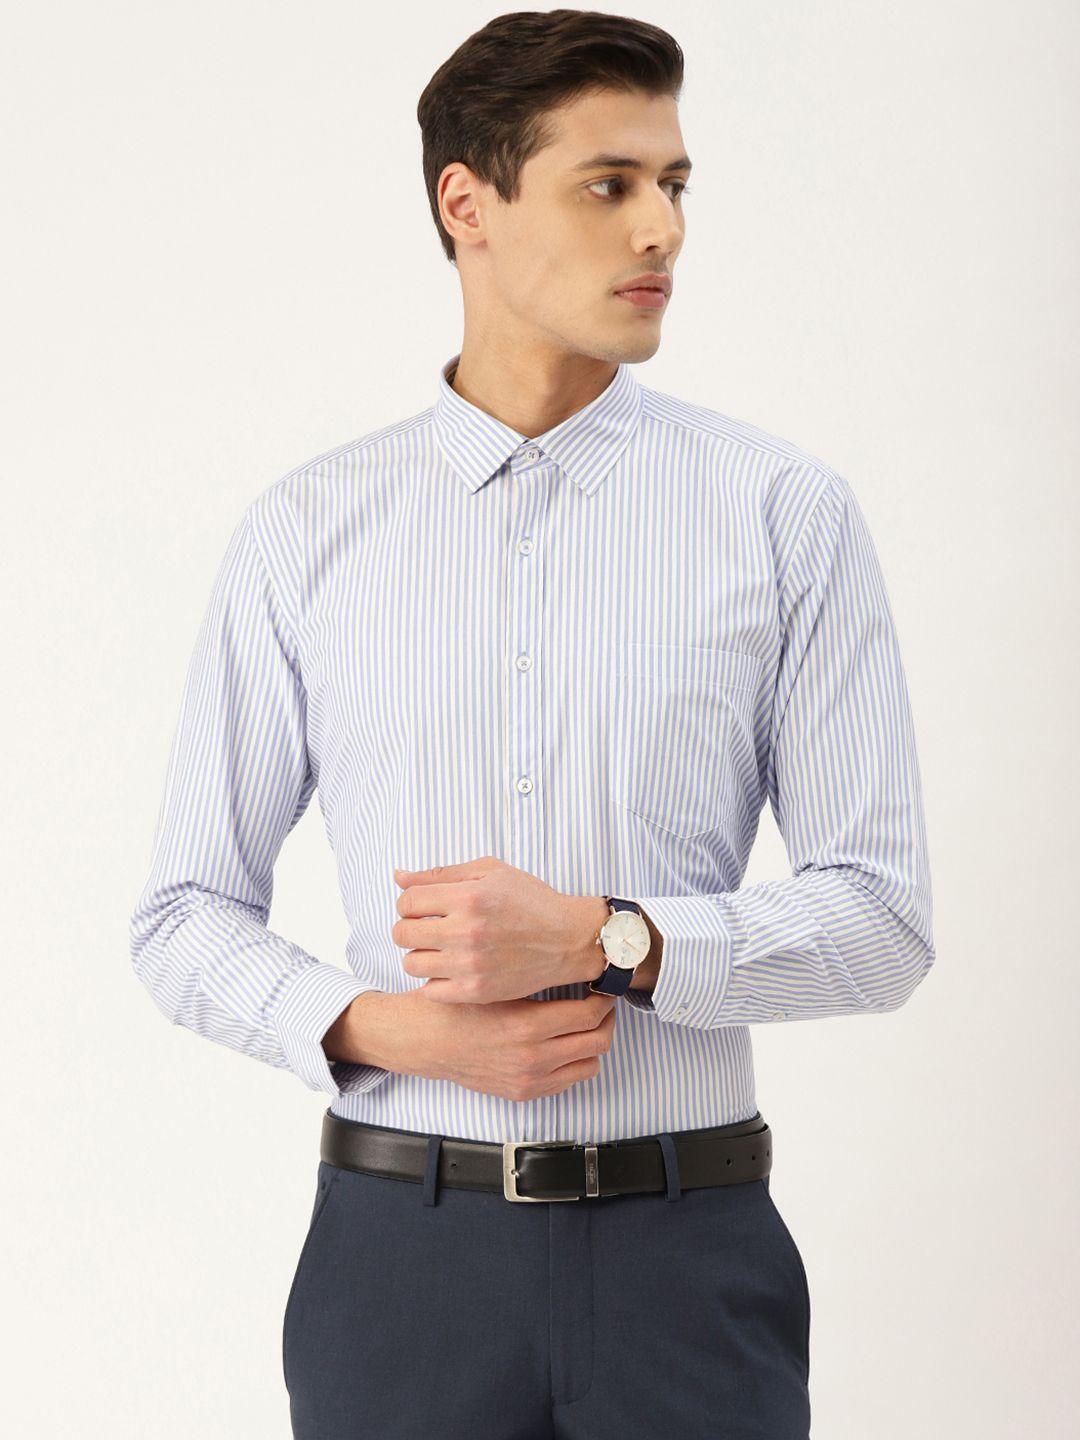 style-quotient-men-blue-&-white-striped-formal-shirt